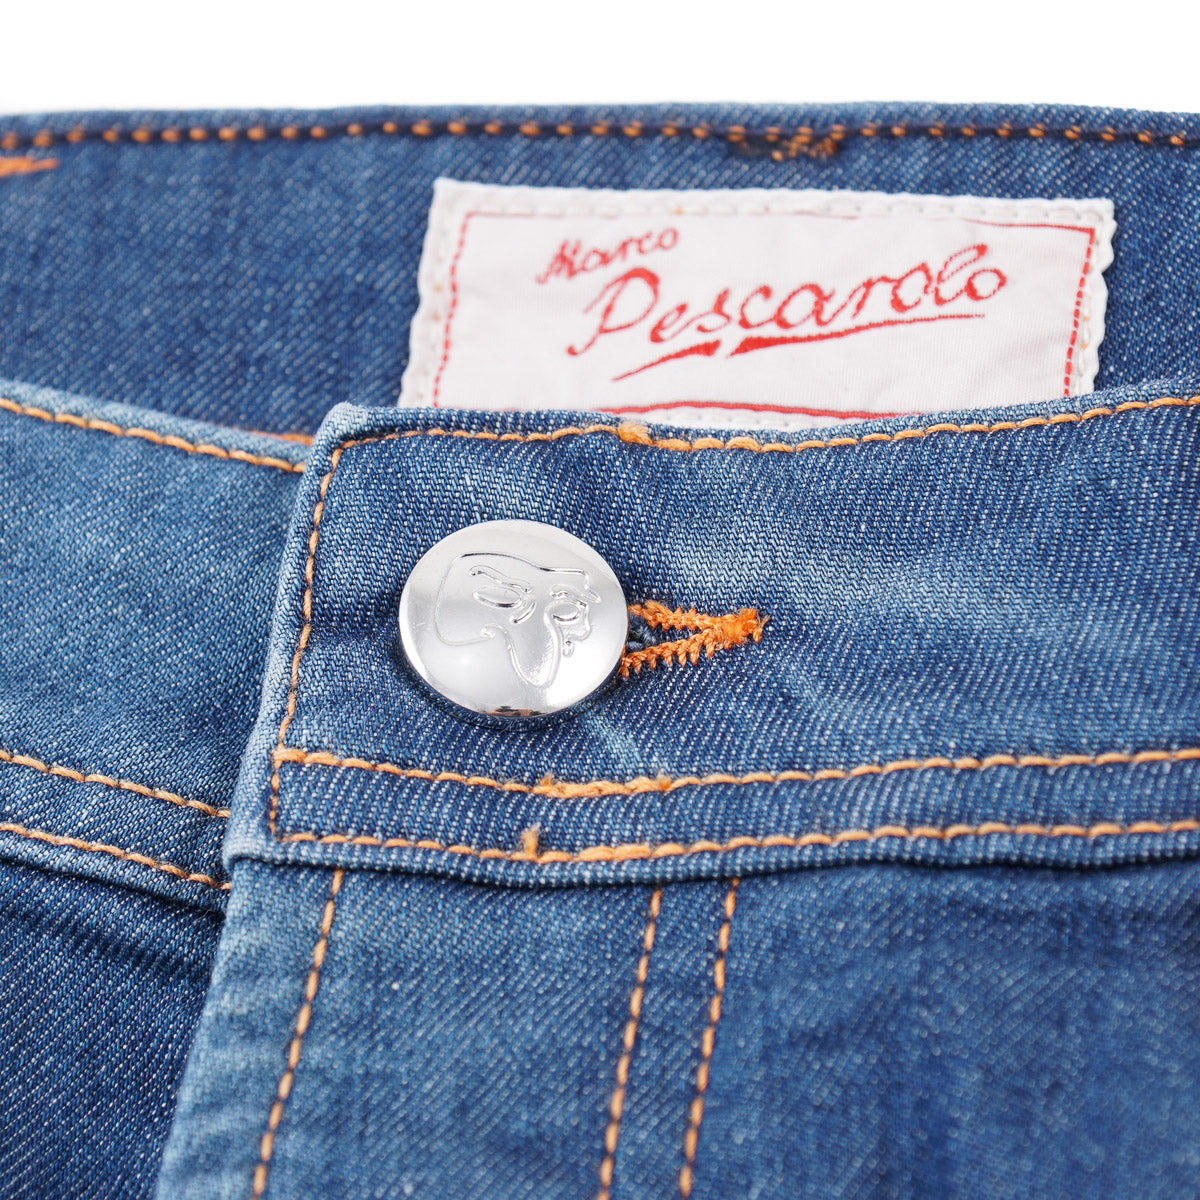 Marco Pescarolo Cotton-Silk Denim Jeans - Top Shelf Apparel